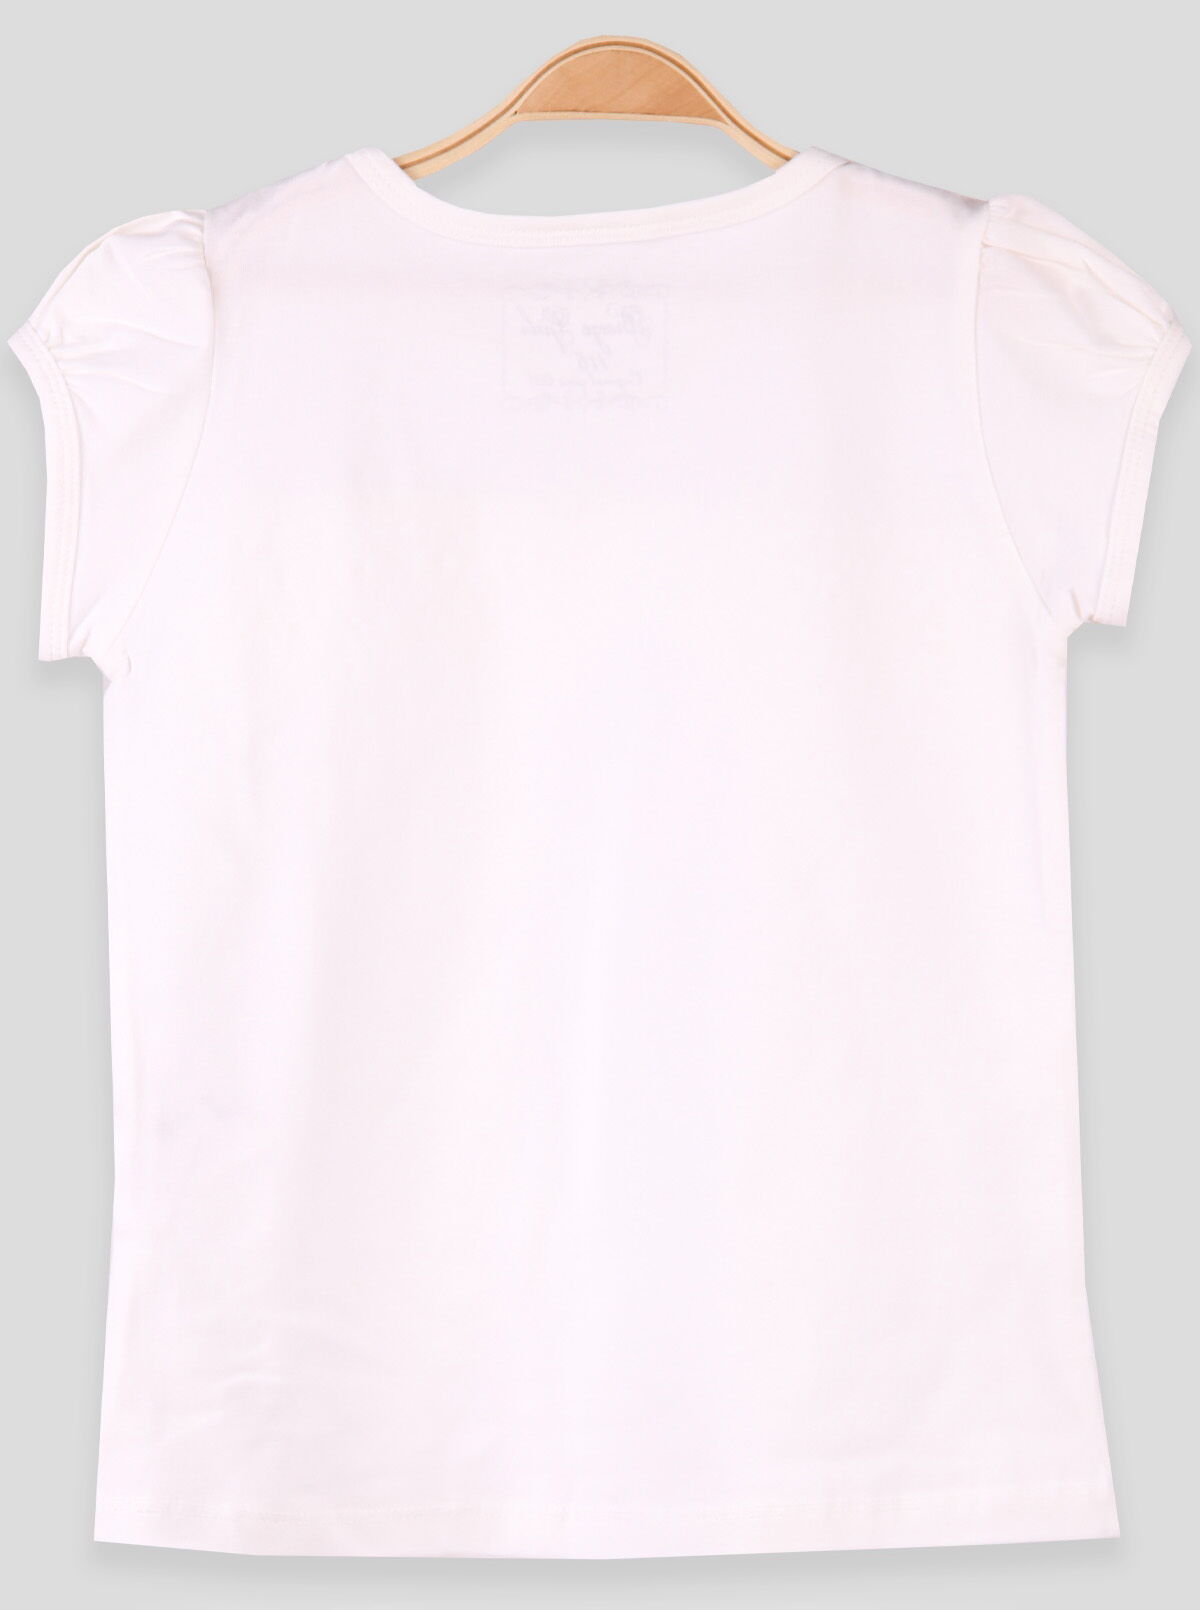 Трикотажная блузка для девочки Breeze молочная 14516 - фото